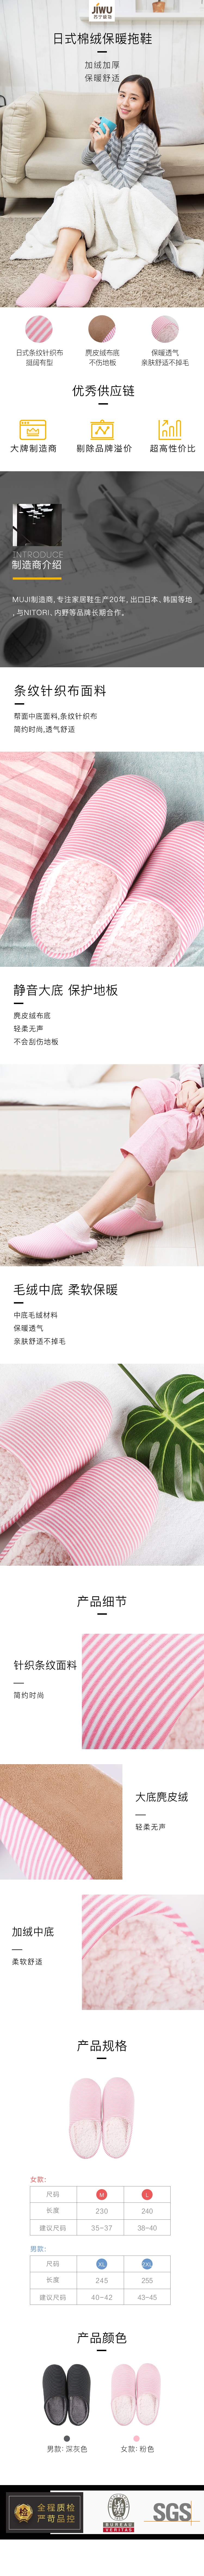 Women's Fleece Lined Pink Striped House Slippers Size S